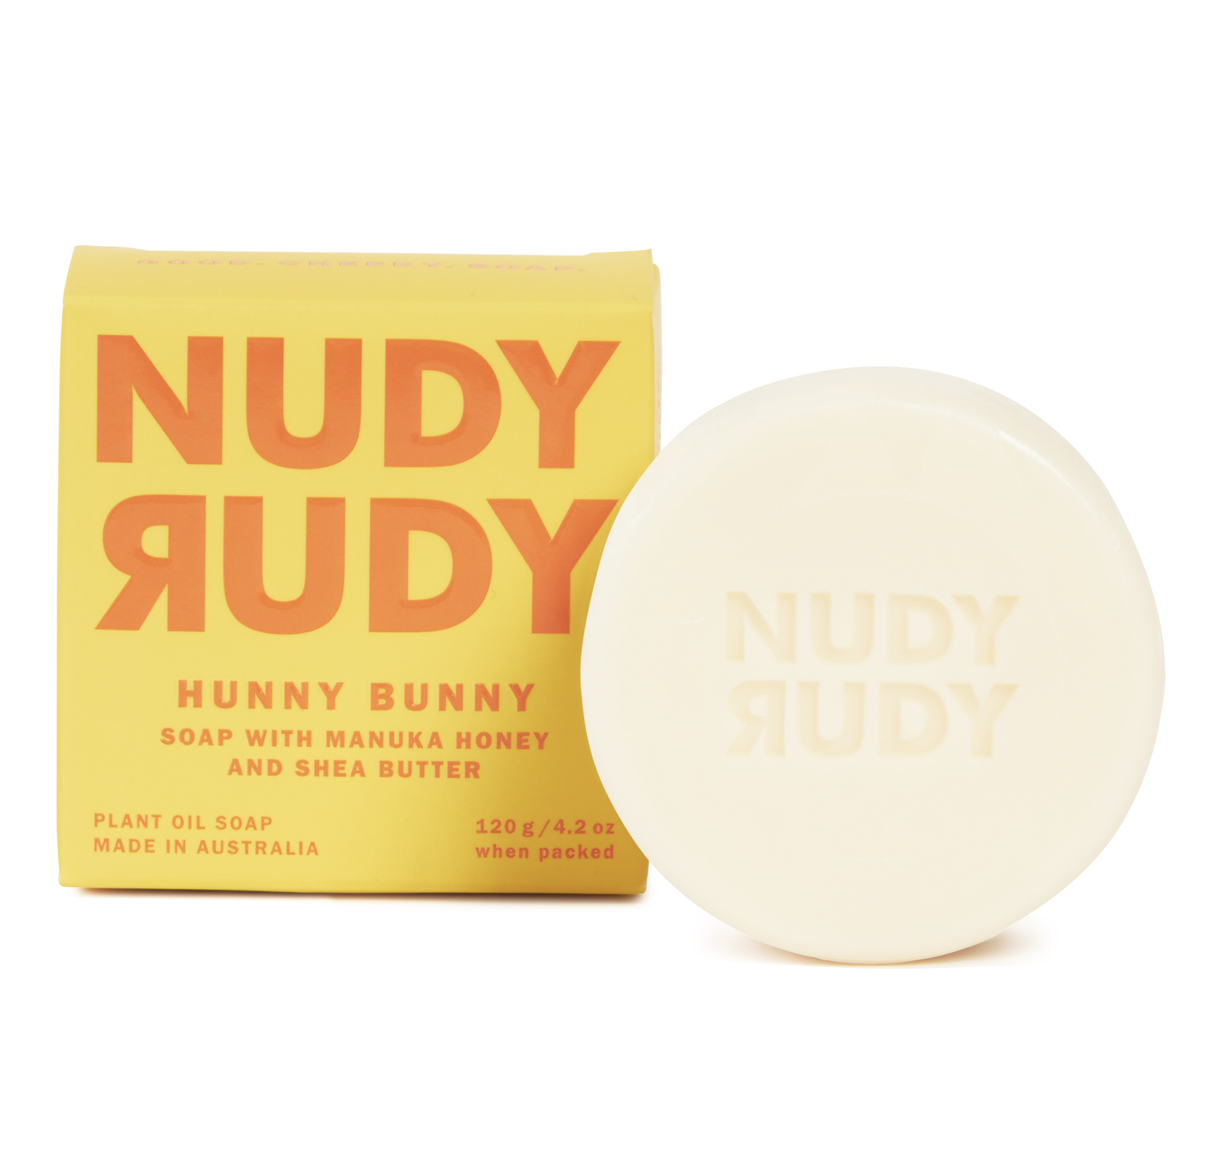 Hunny Bunny Bar Soap Puck - 6 Month